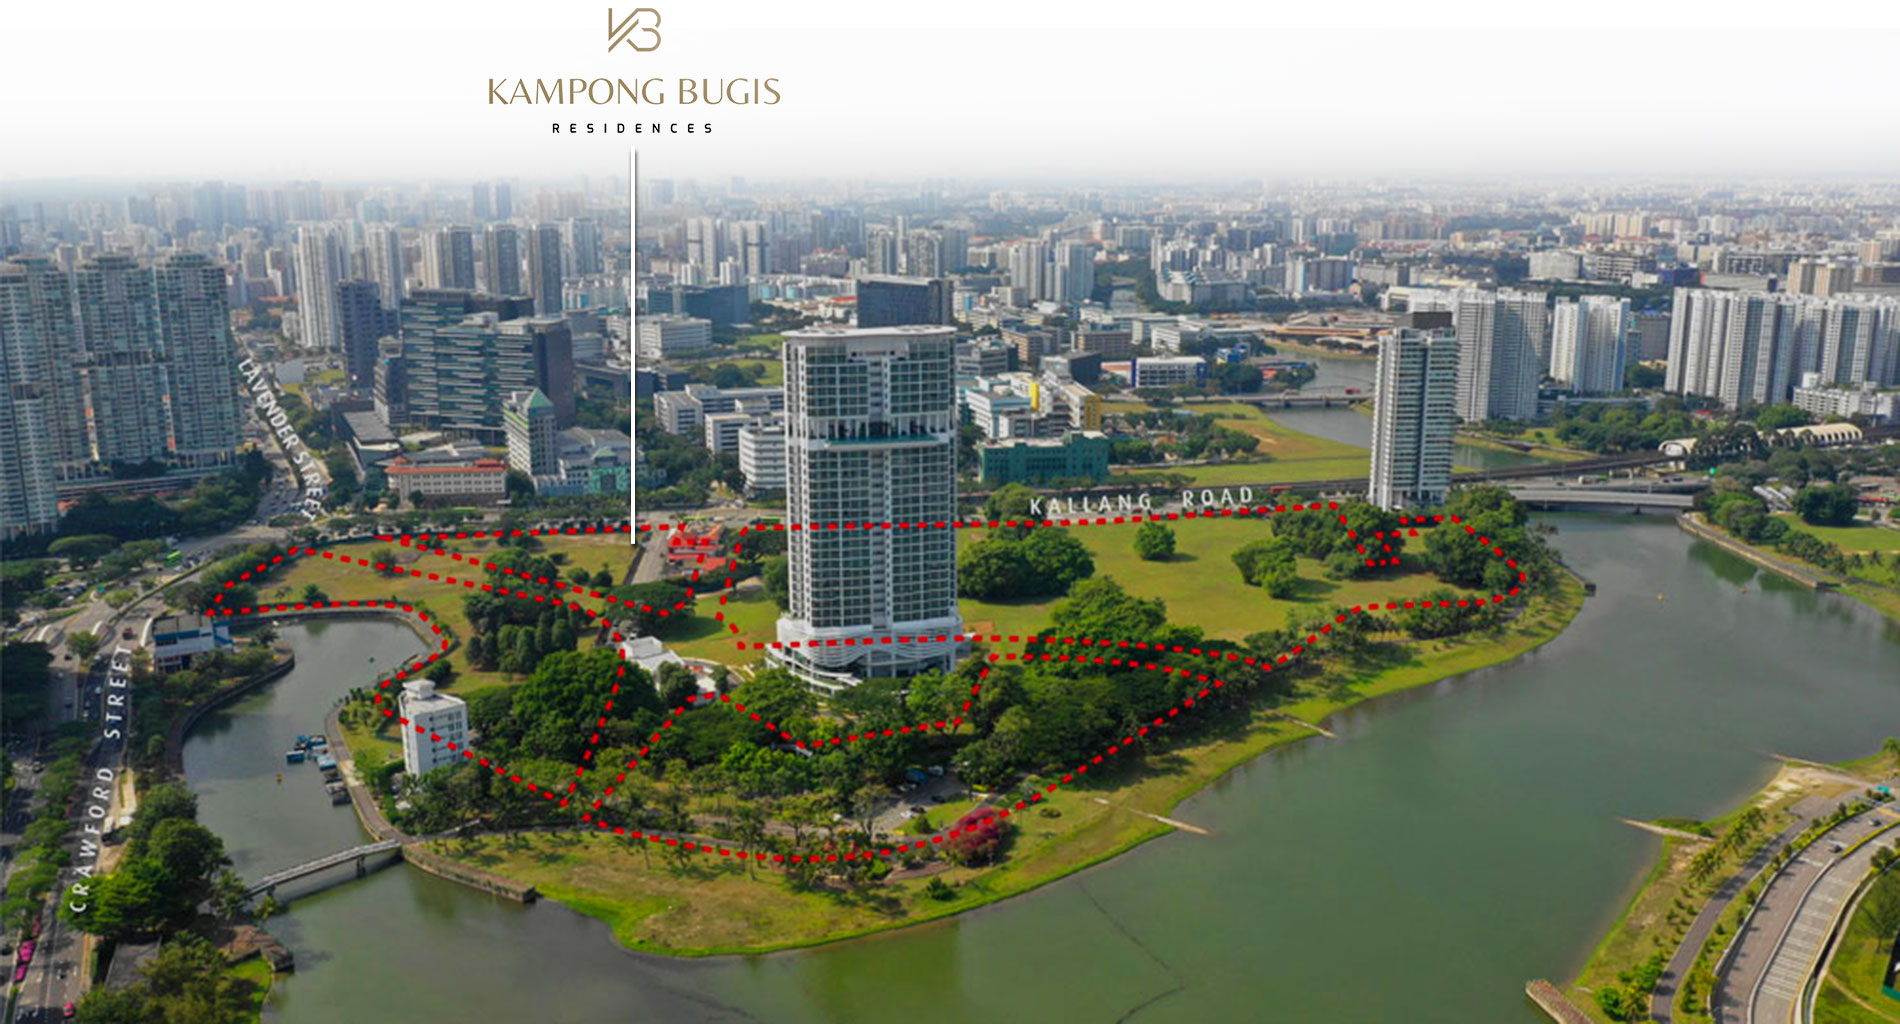 Kampong Bugis Residences 360 panorama